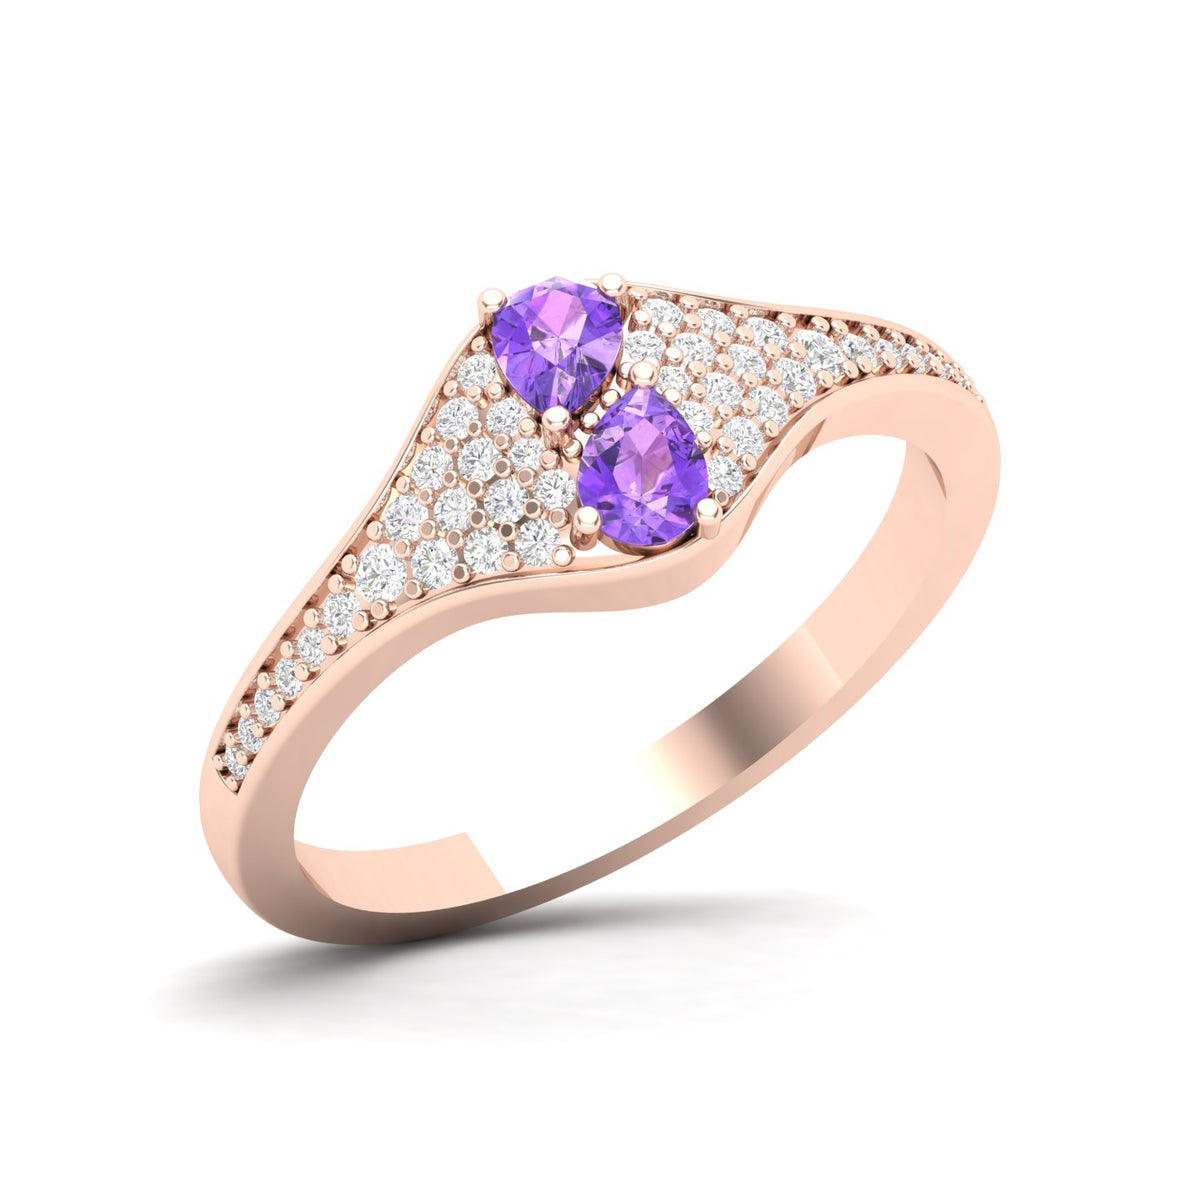 Buy 50+ Emerald Rings Online | BlueStone.com - India's #1 Online Jewellery  Brand